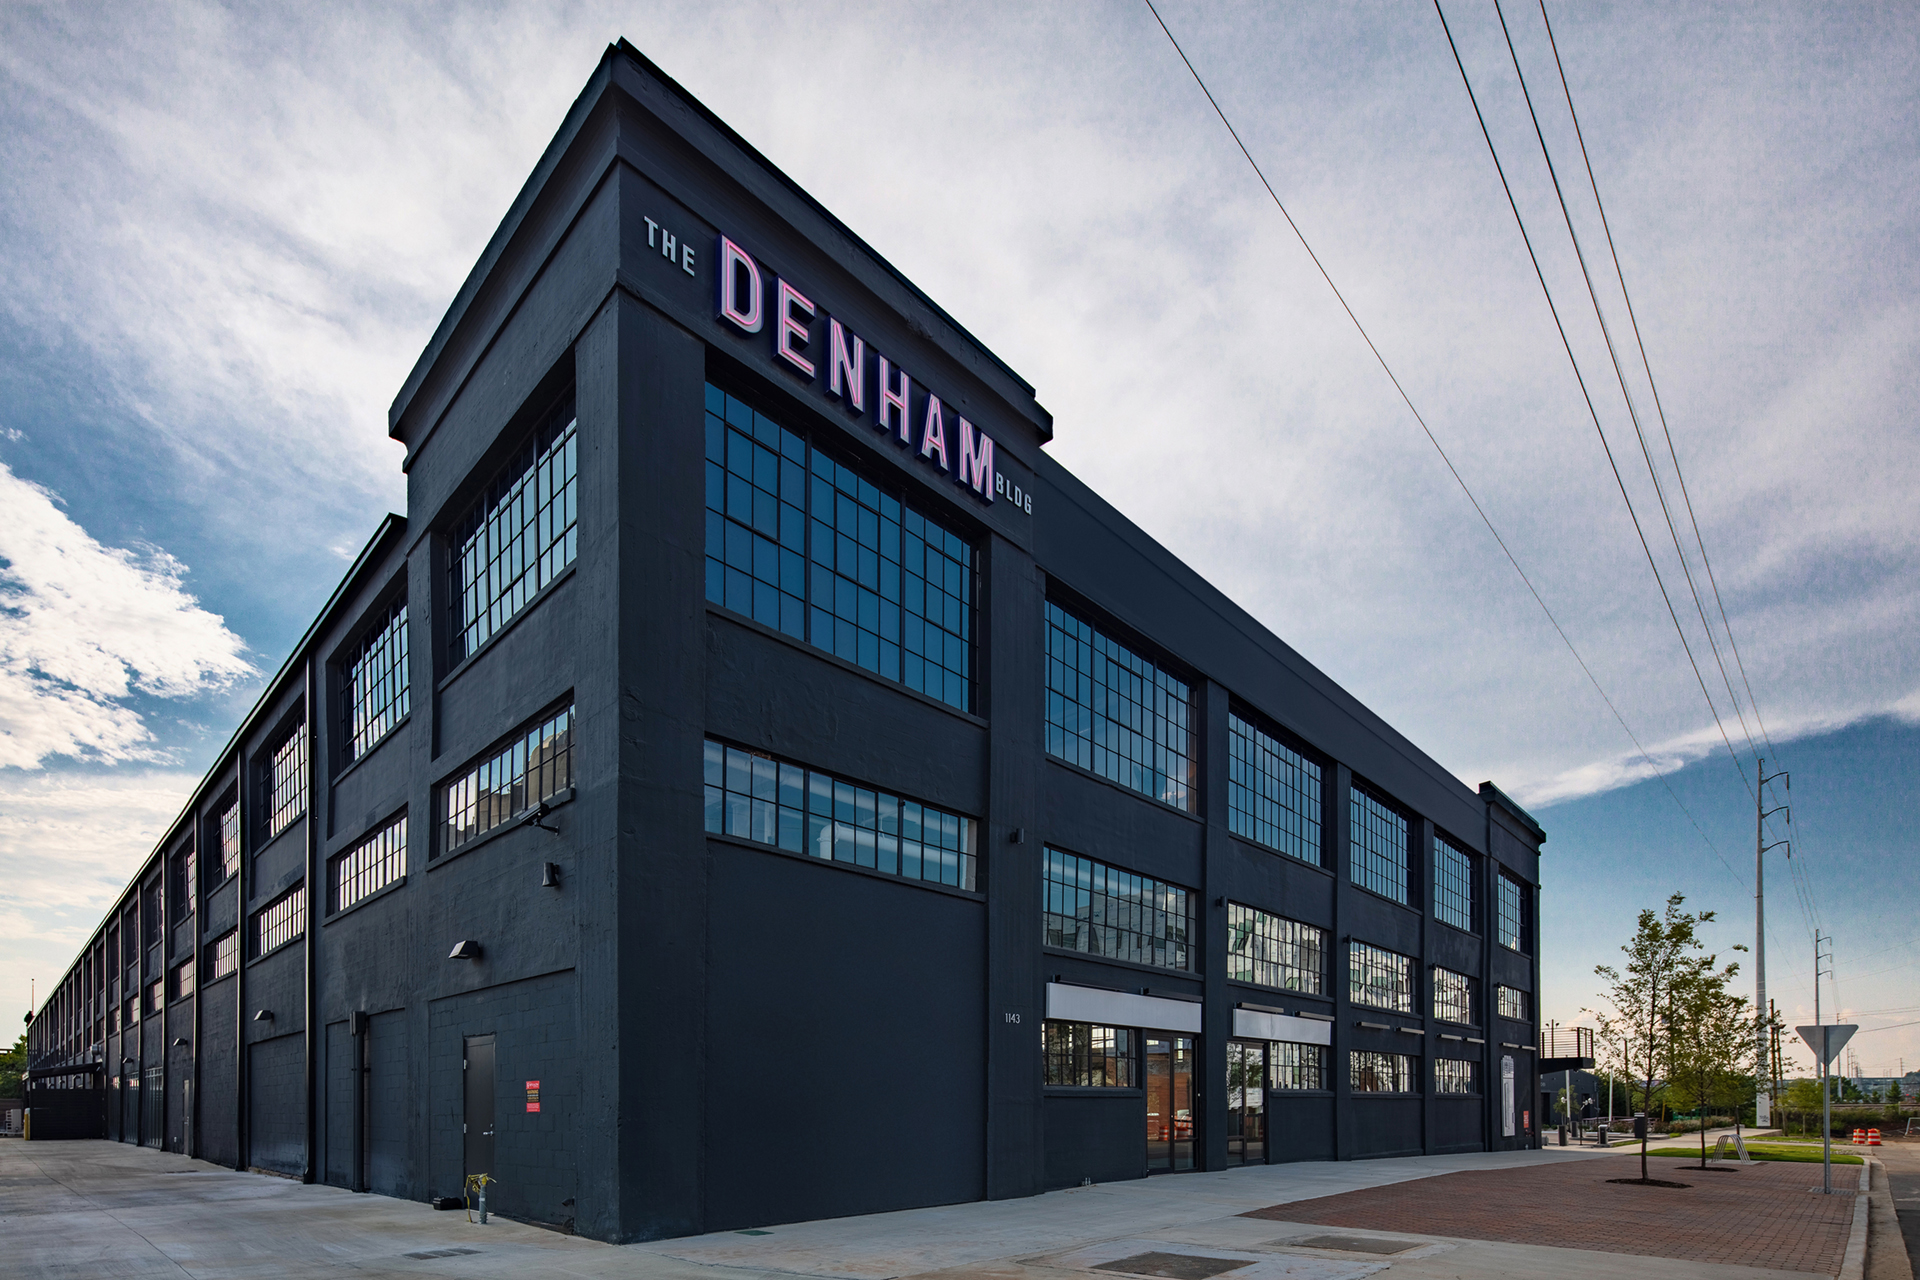 Exterior view of The Denham Building in South Birmingham, AL